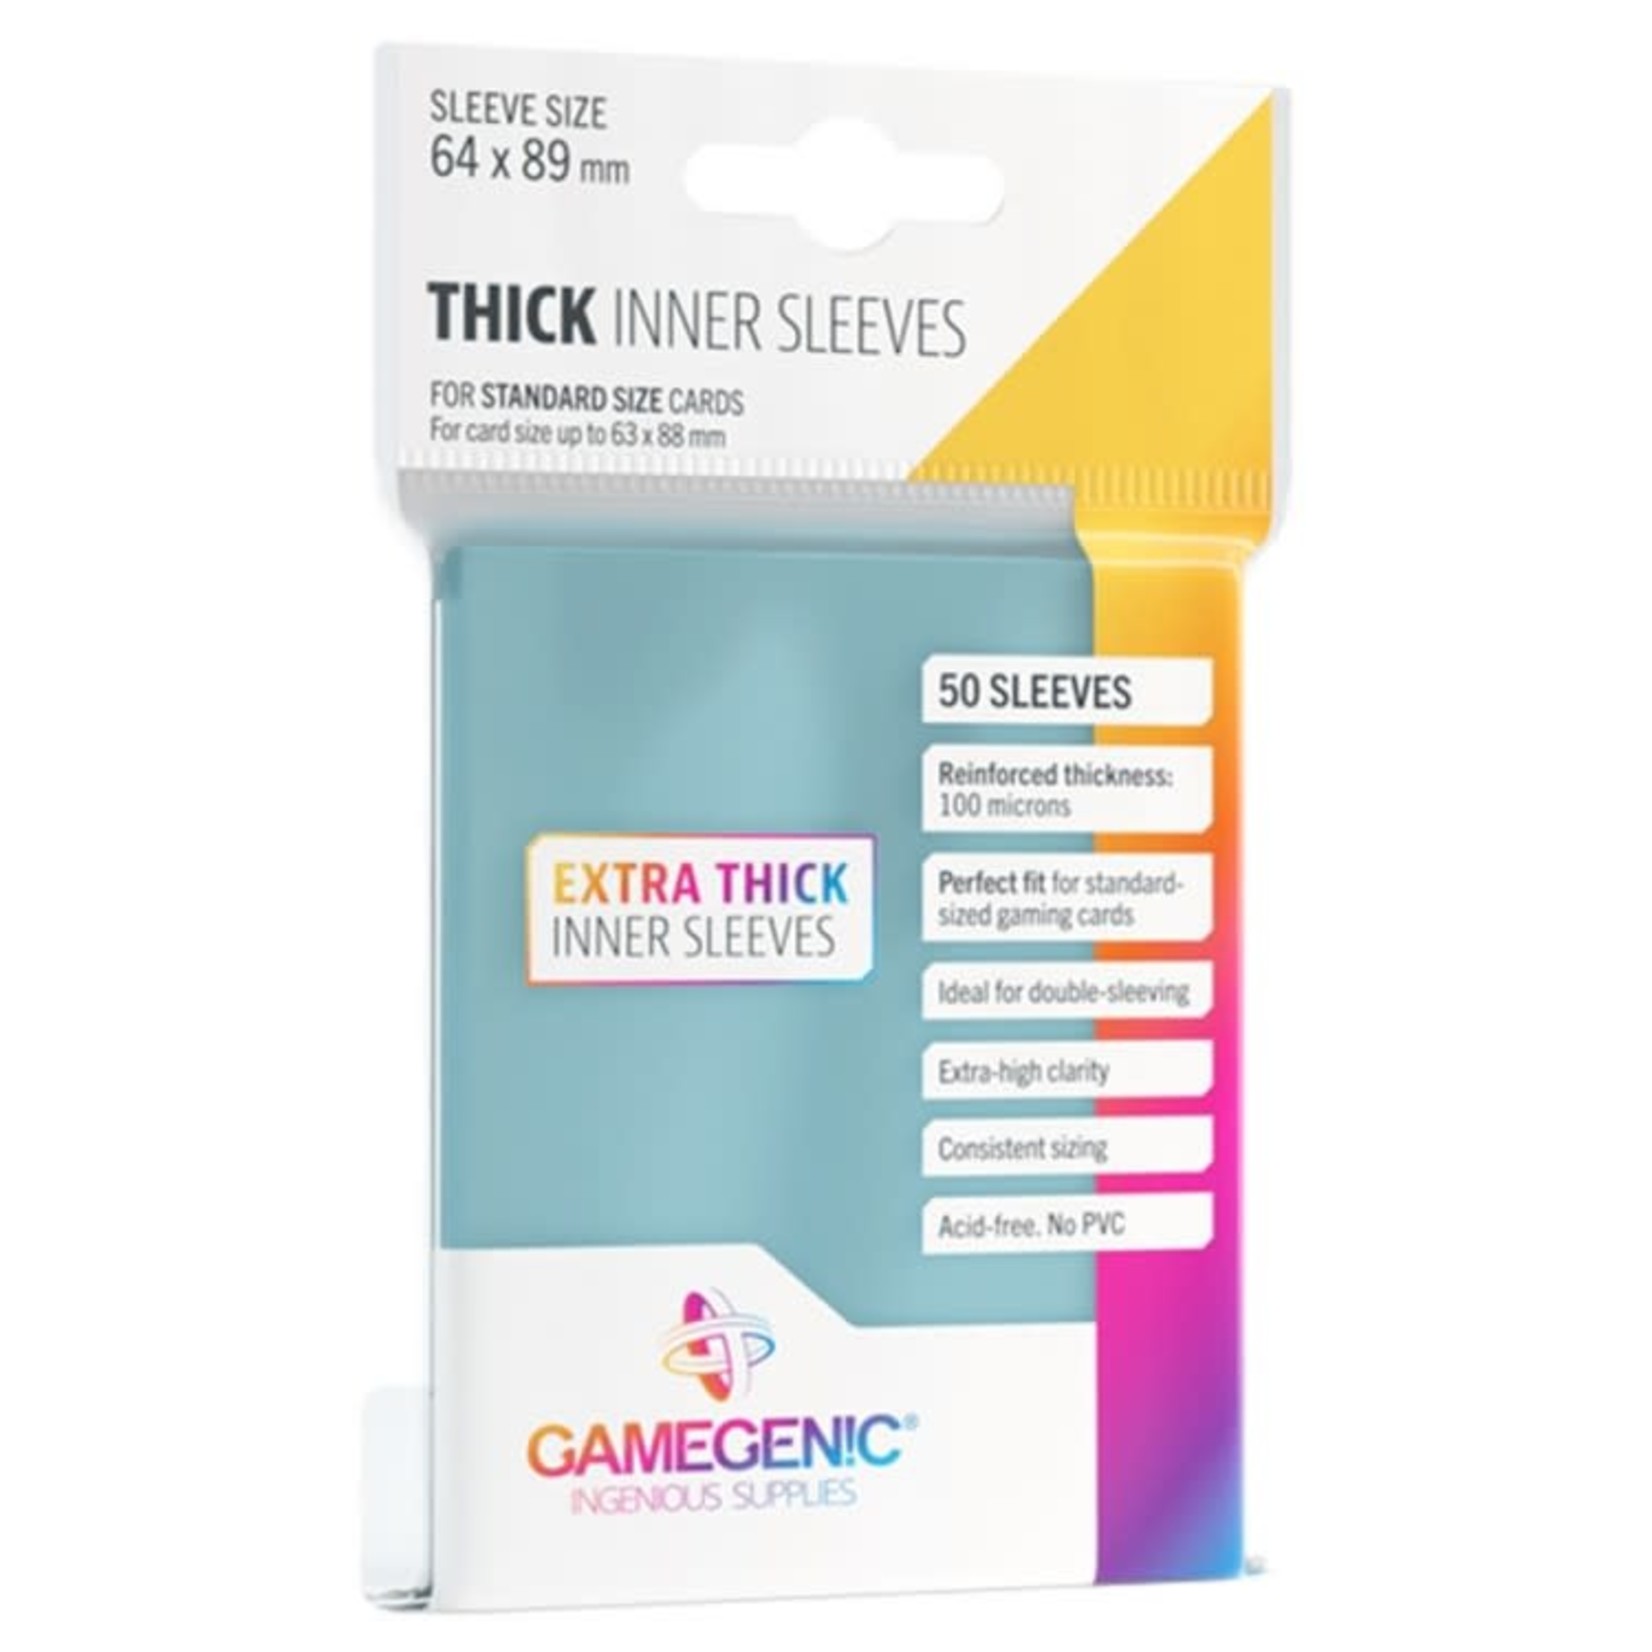 Gamegenic GameGenic Thick Inner Sleeves